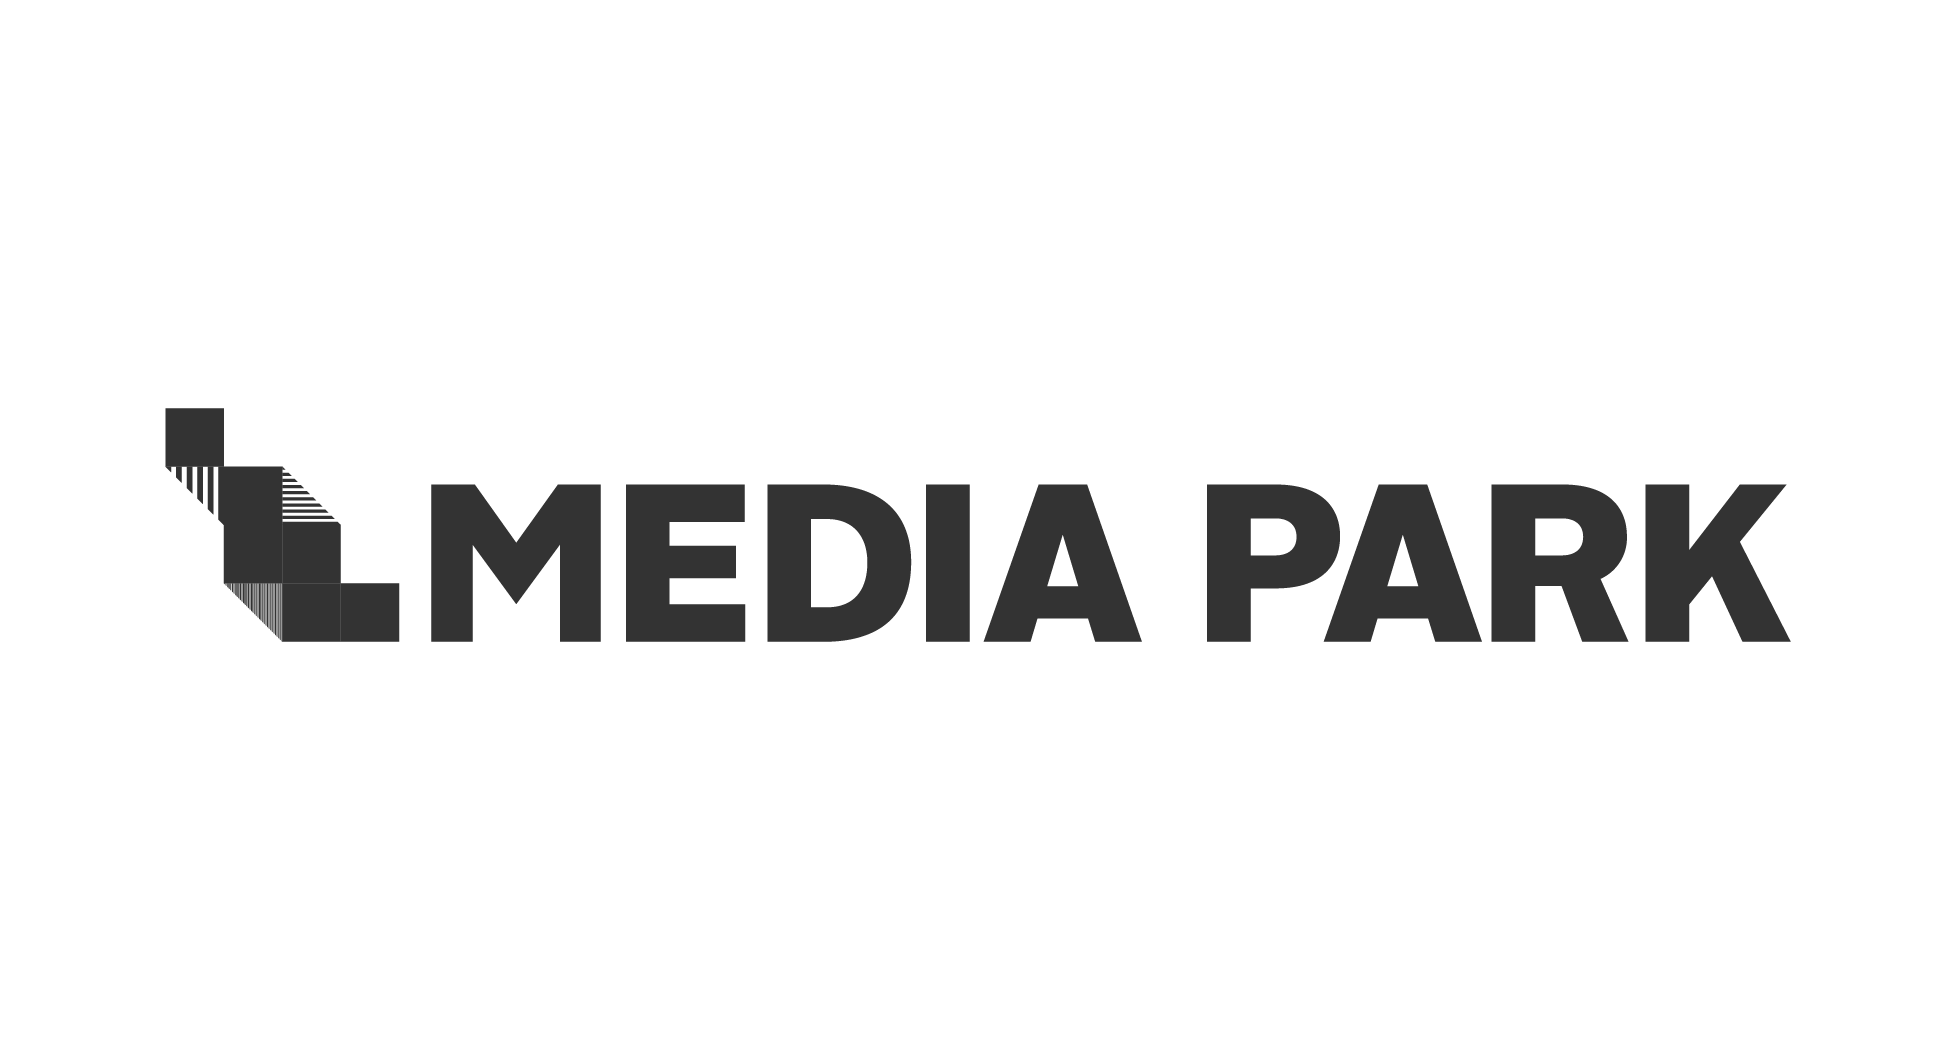 Media Park Hilversum